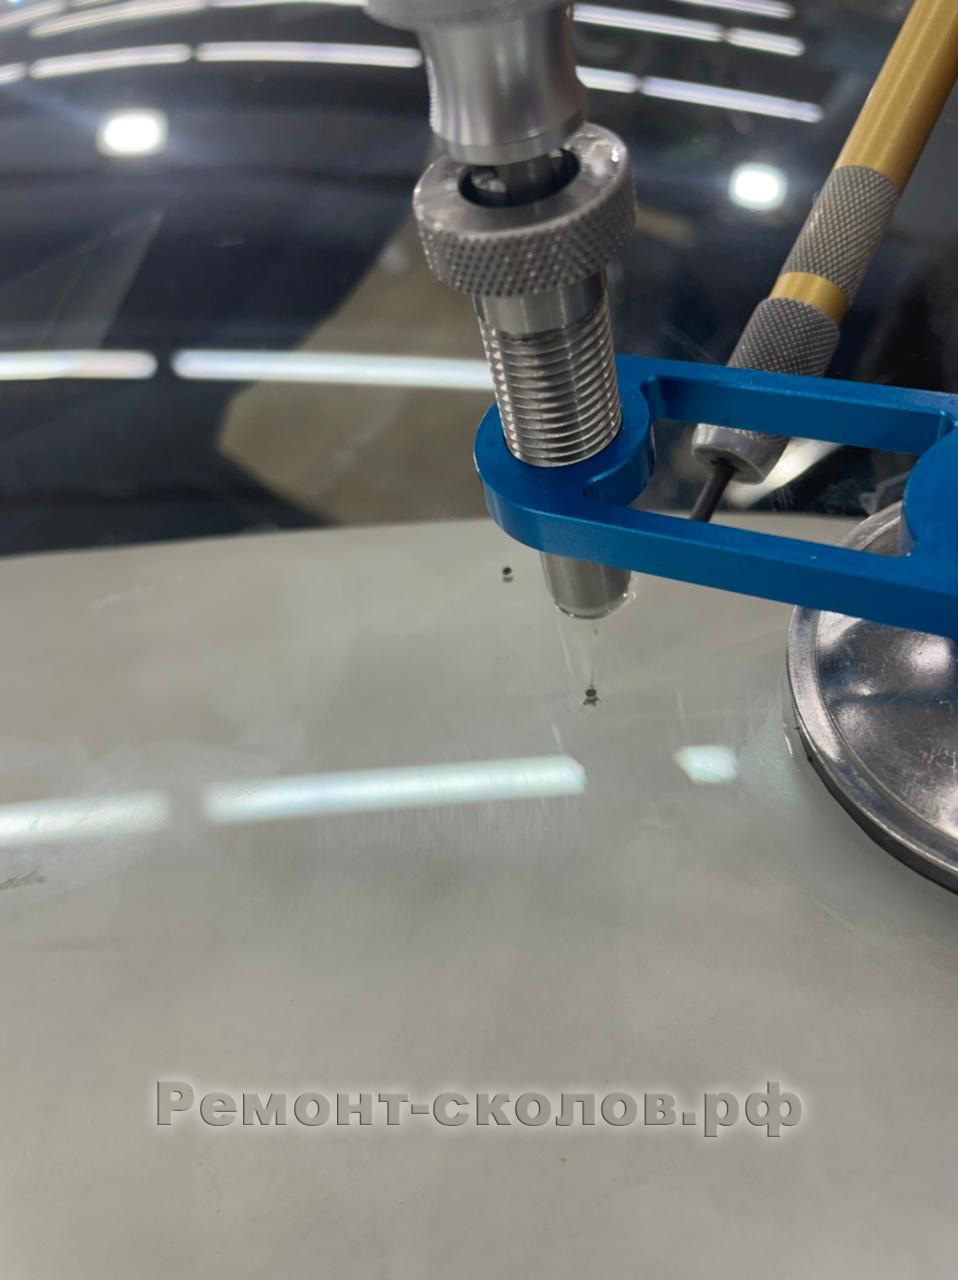 Mercedes ремонт скола на лобовом стекле в ЮЗАО